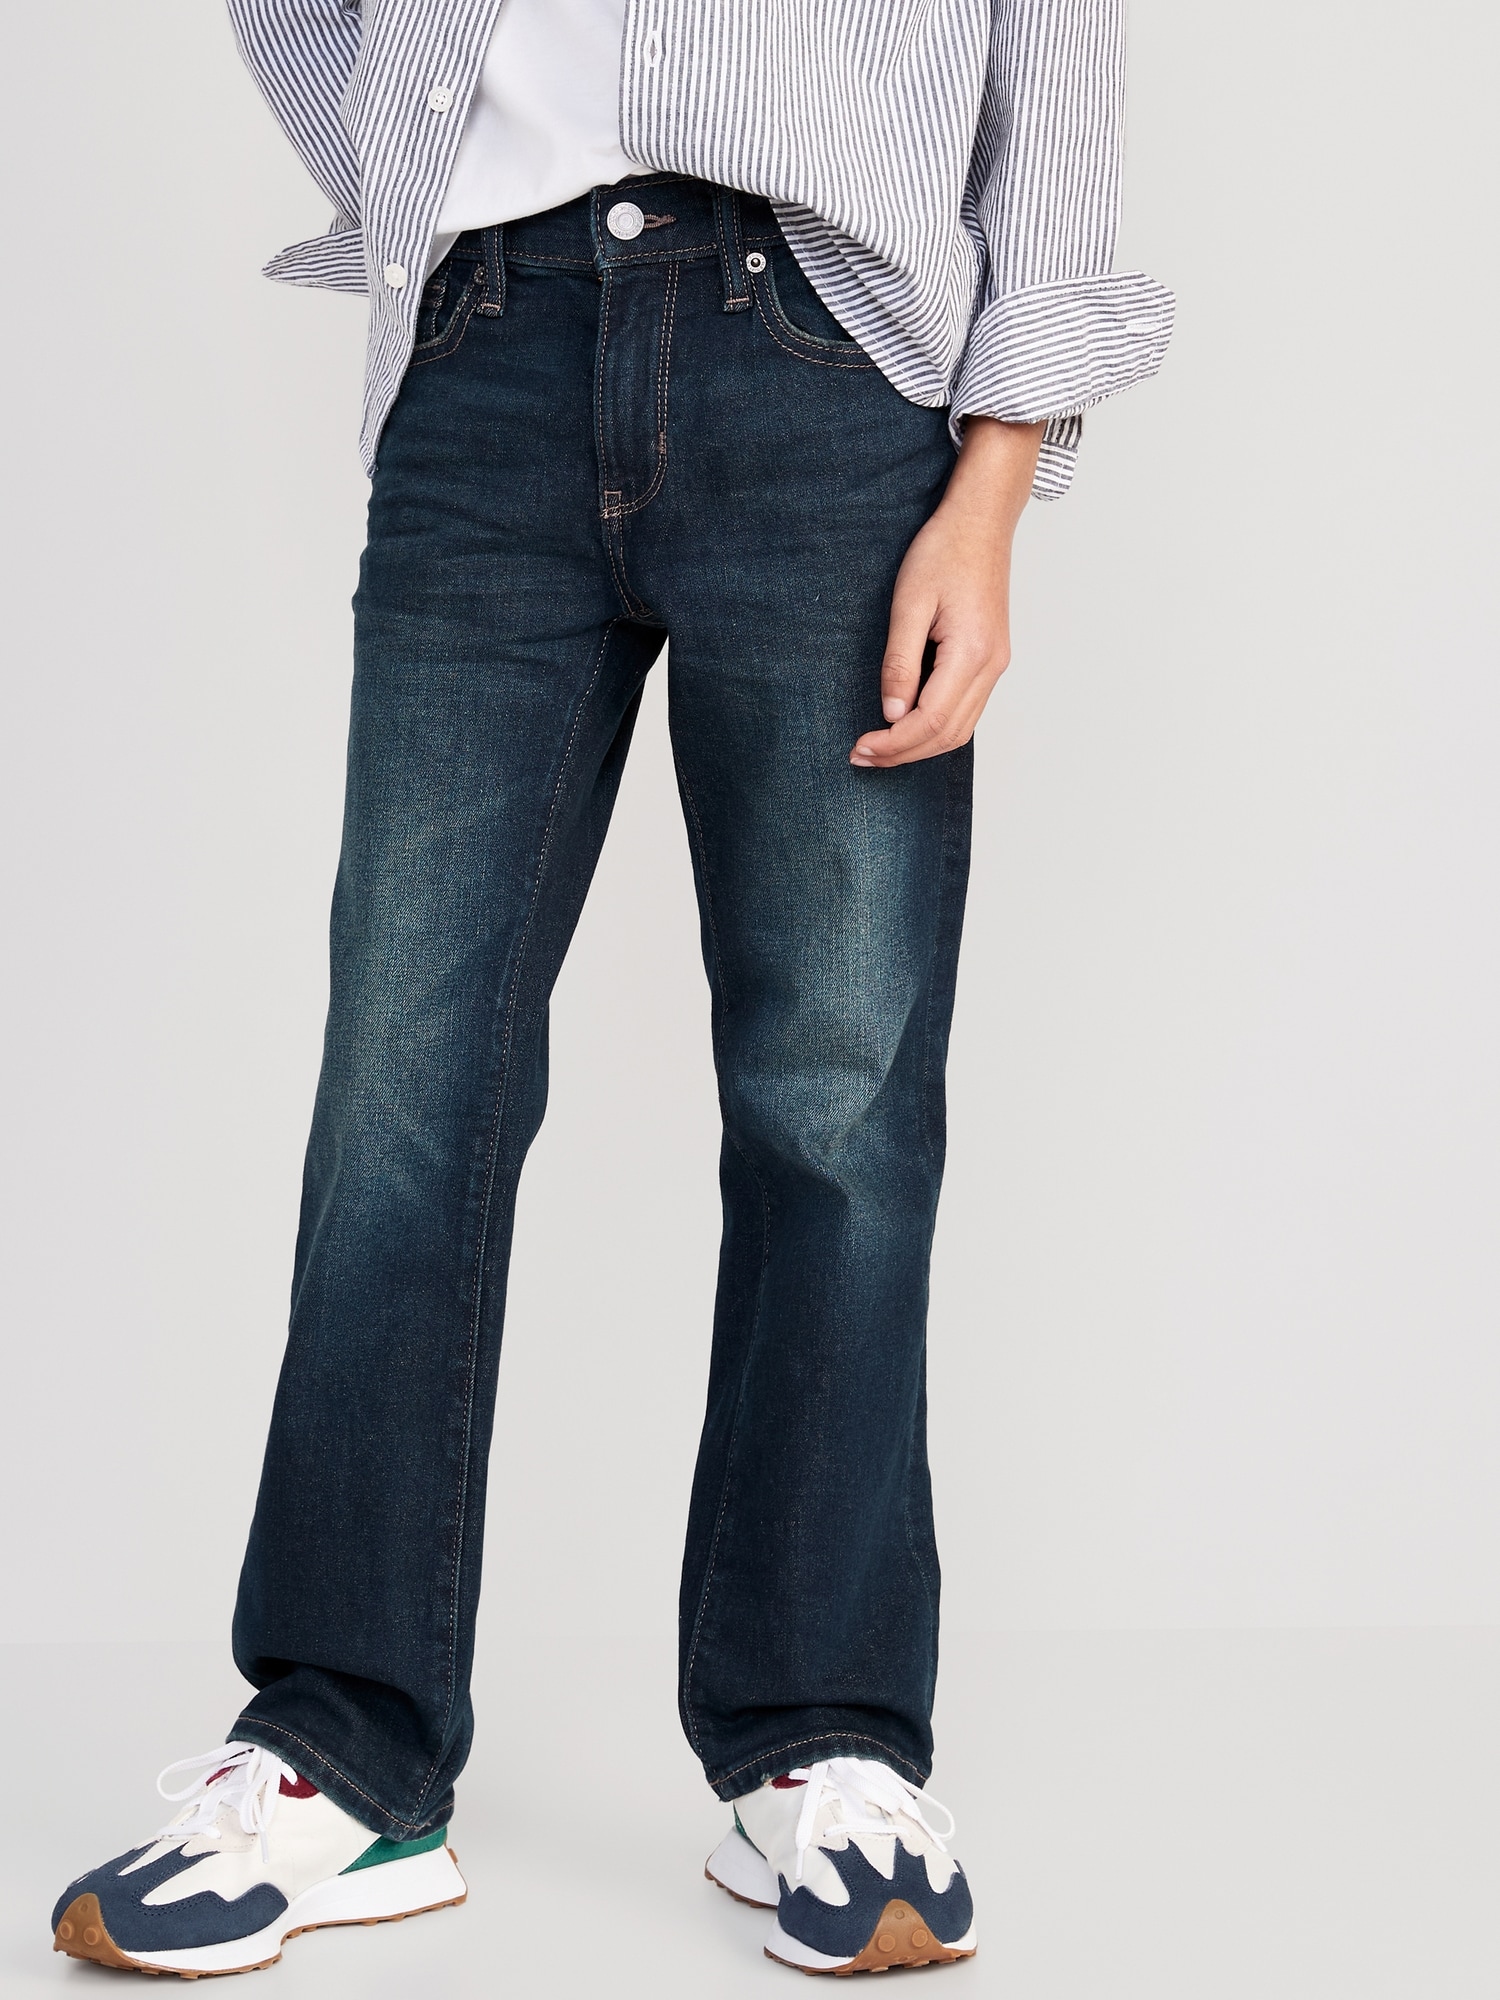 Built-In Flex Boot-Cut Jeans for Boys Hot Deal